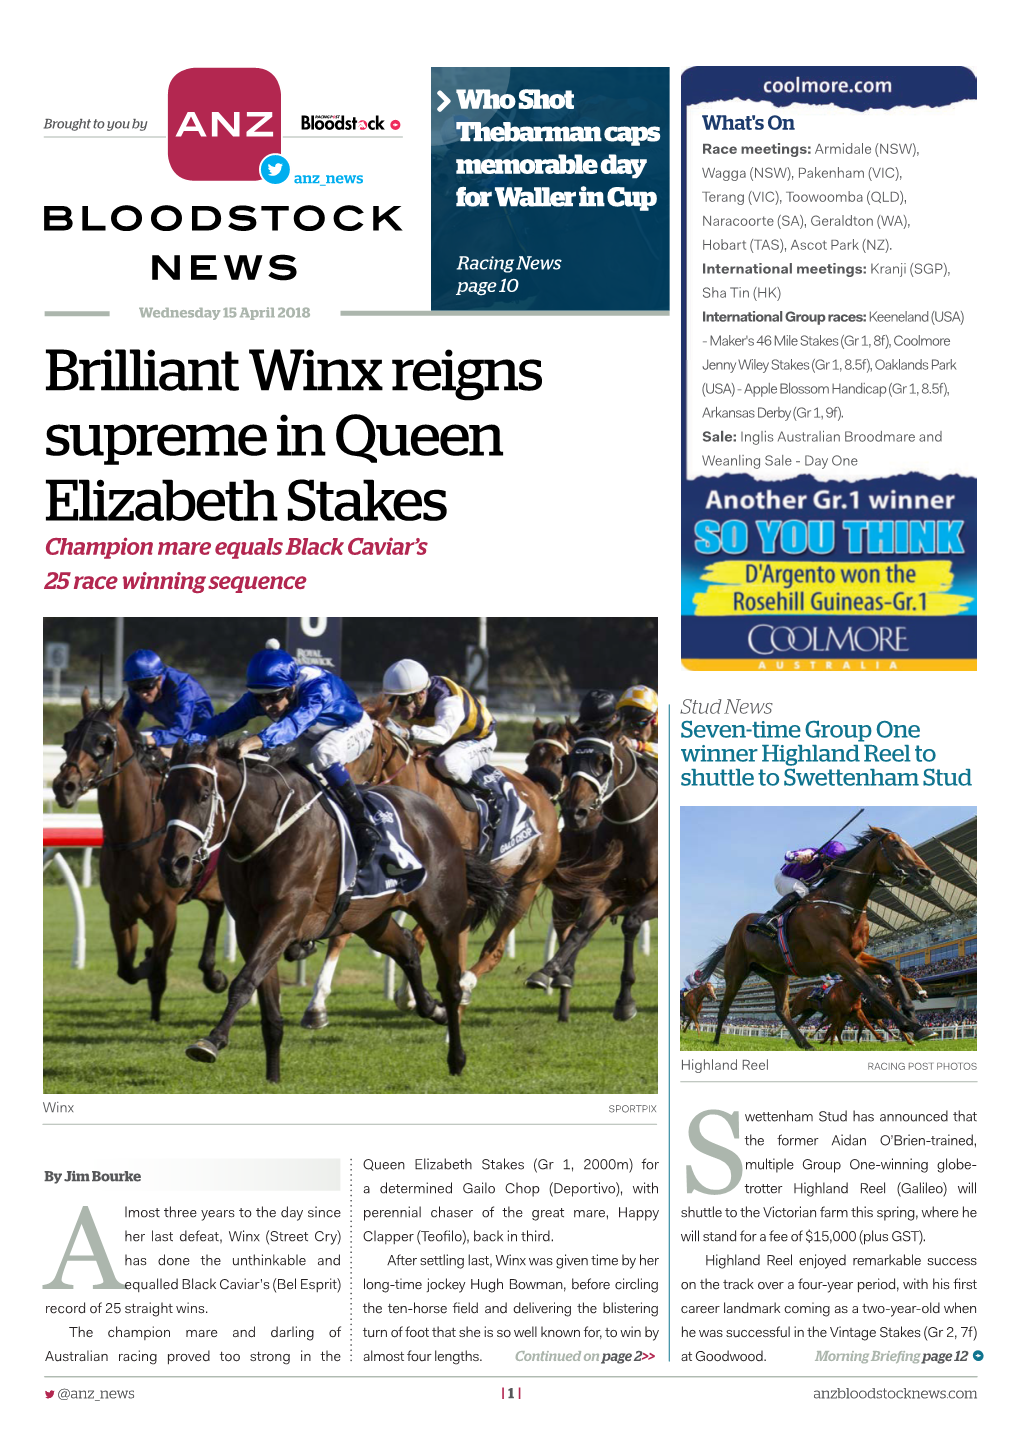 Brilliant Winx Reigns Supreme in Queen Elizabeth Stakes